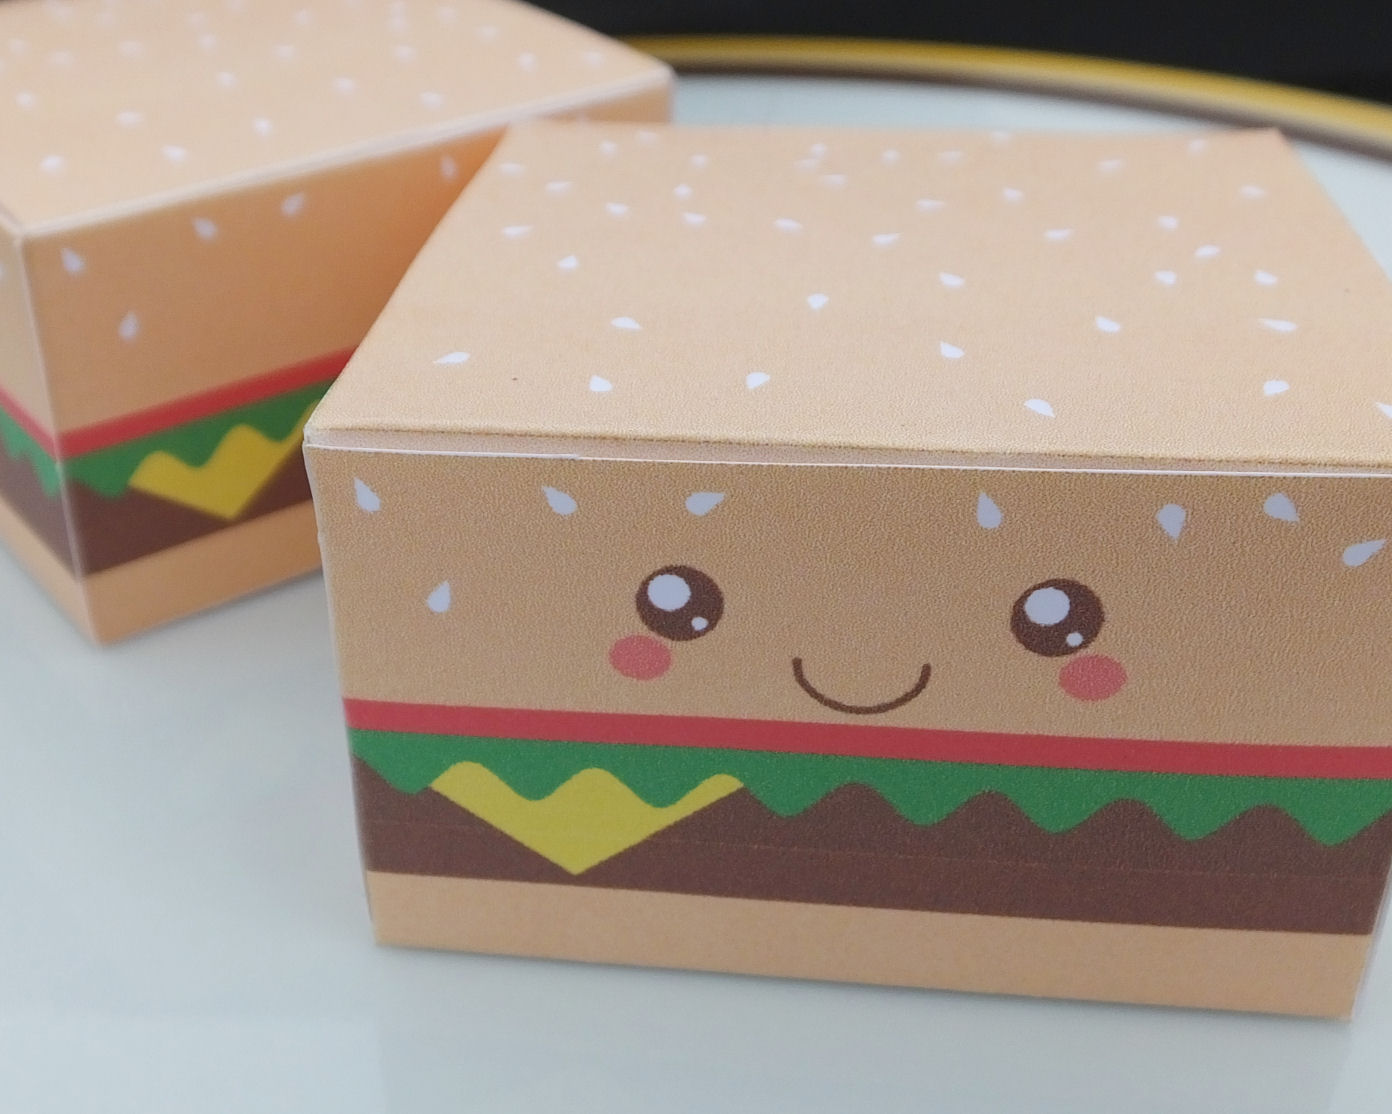 Print and make this cute cheeseburger gift box! #printables #papercrafts